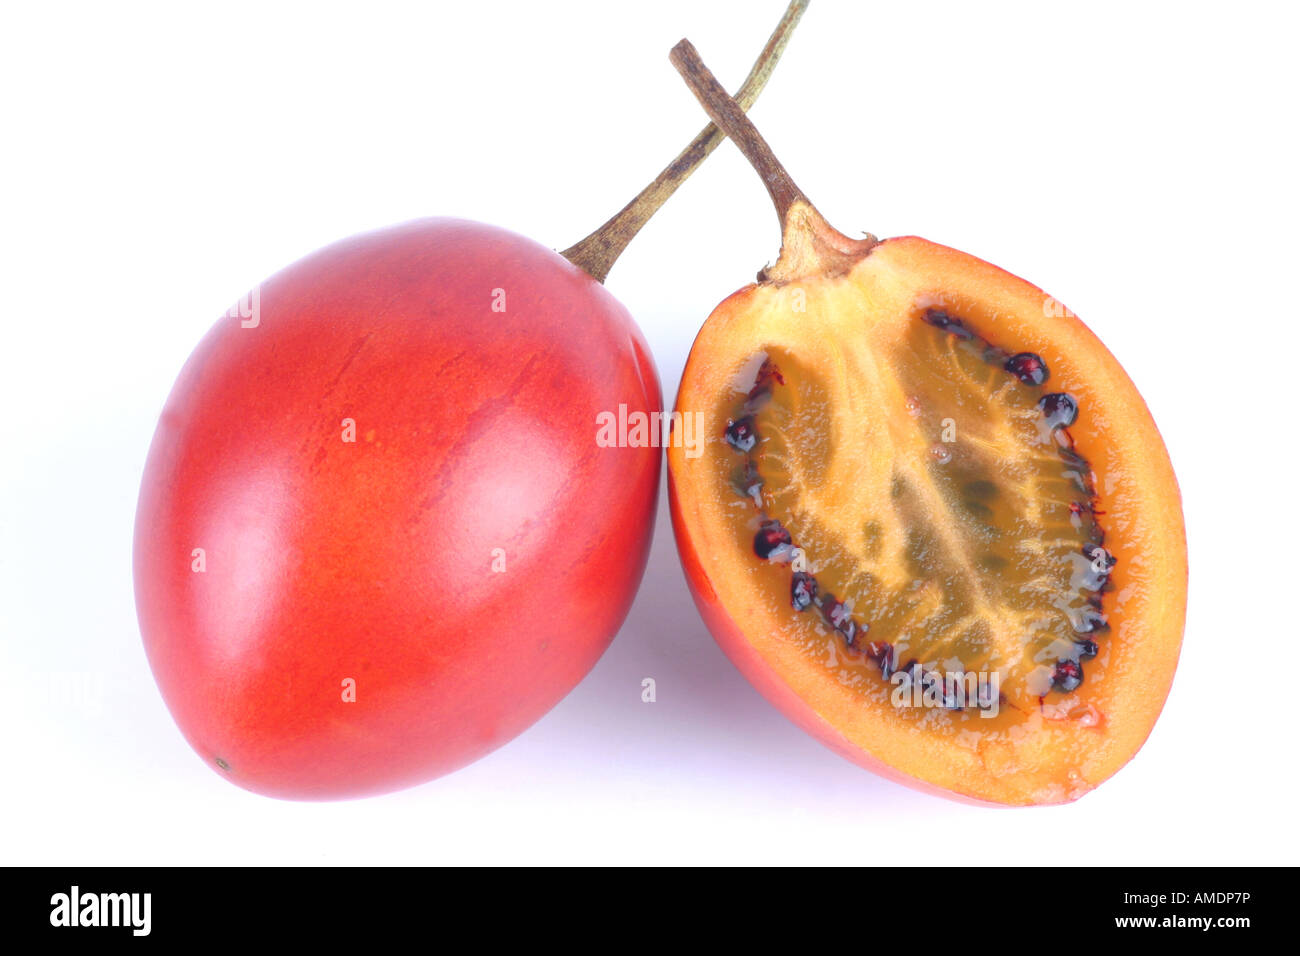 tree tomato Cyphomandra crassicaulis distribution South America fruit cutted cross section Stock Photo